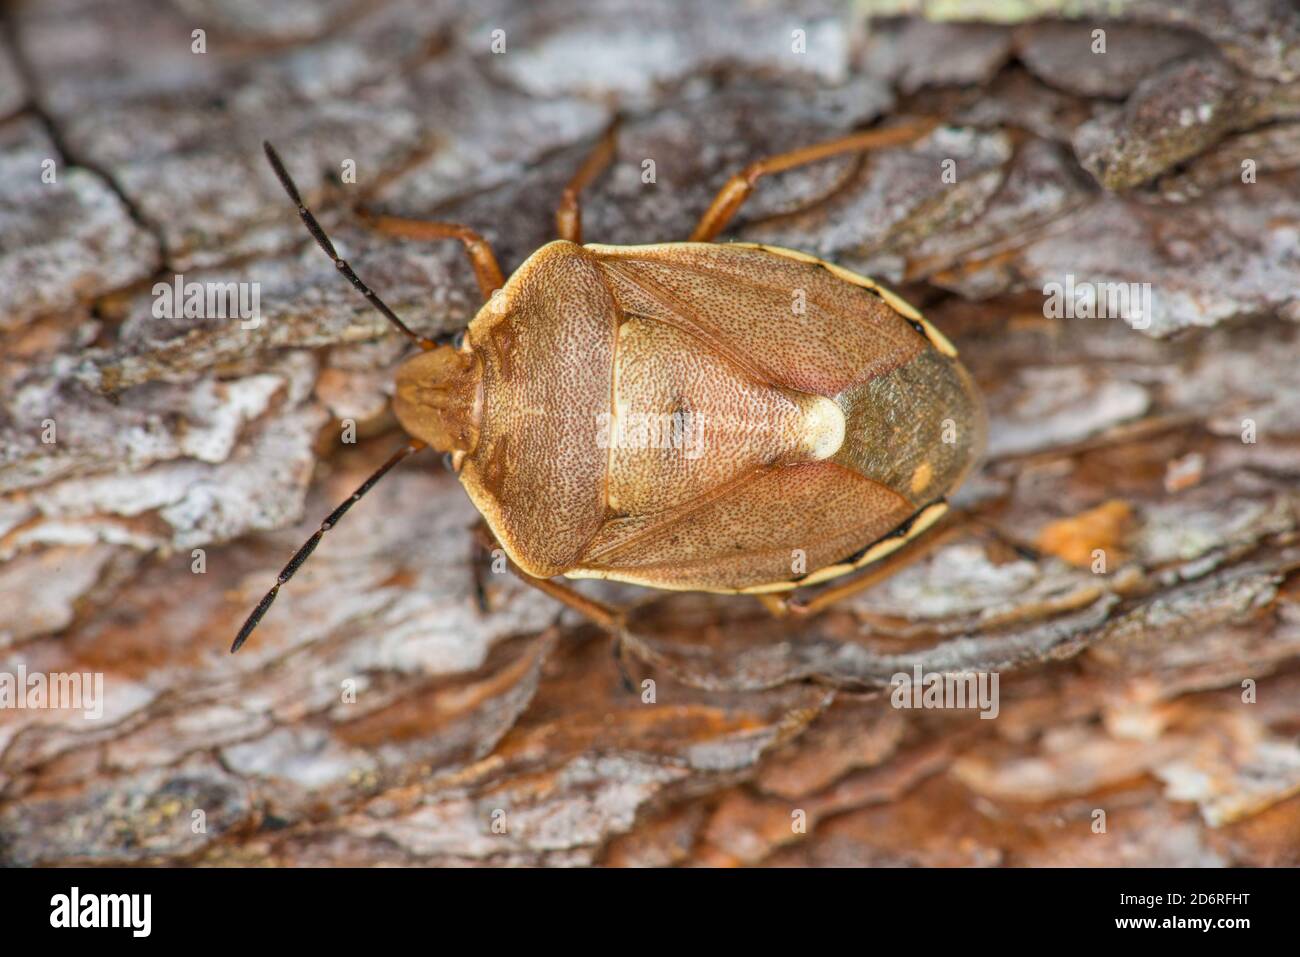 shield bug (Chlorochroa pinicola), sits on bark, Germany Stock Photo